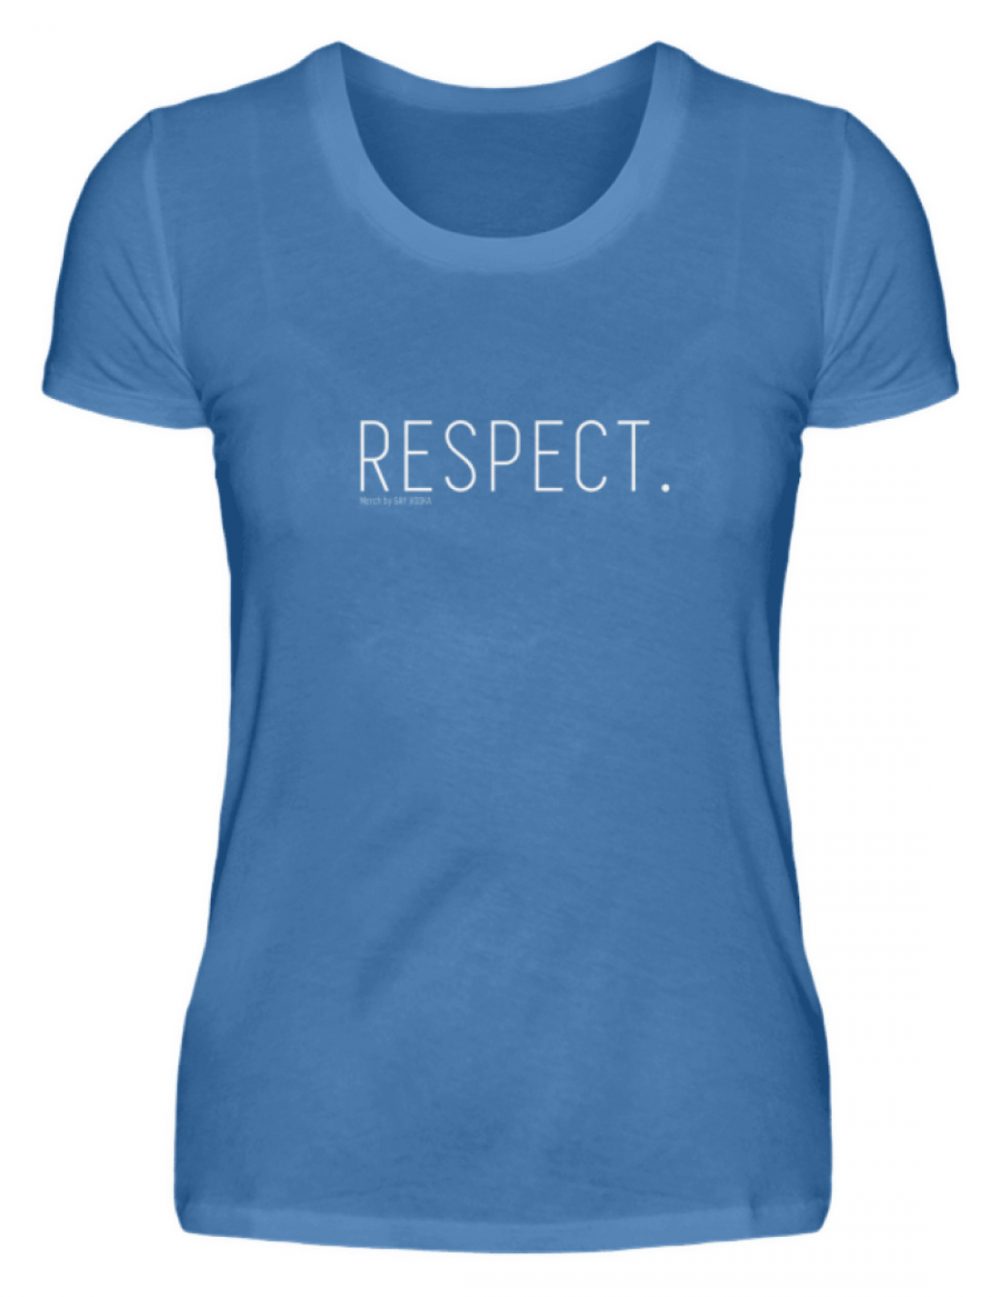 RESPECT. - Damen Premiumshirt-2894